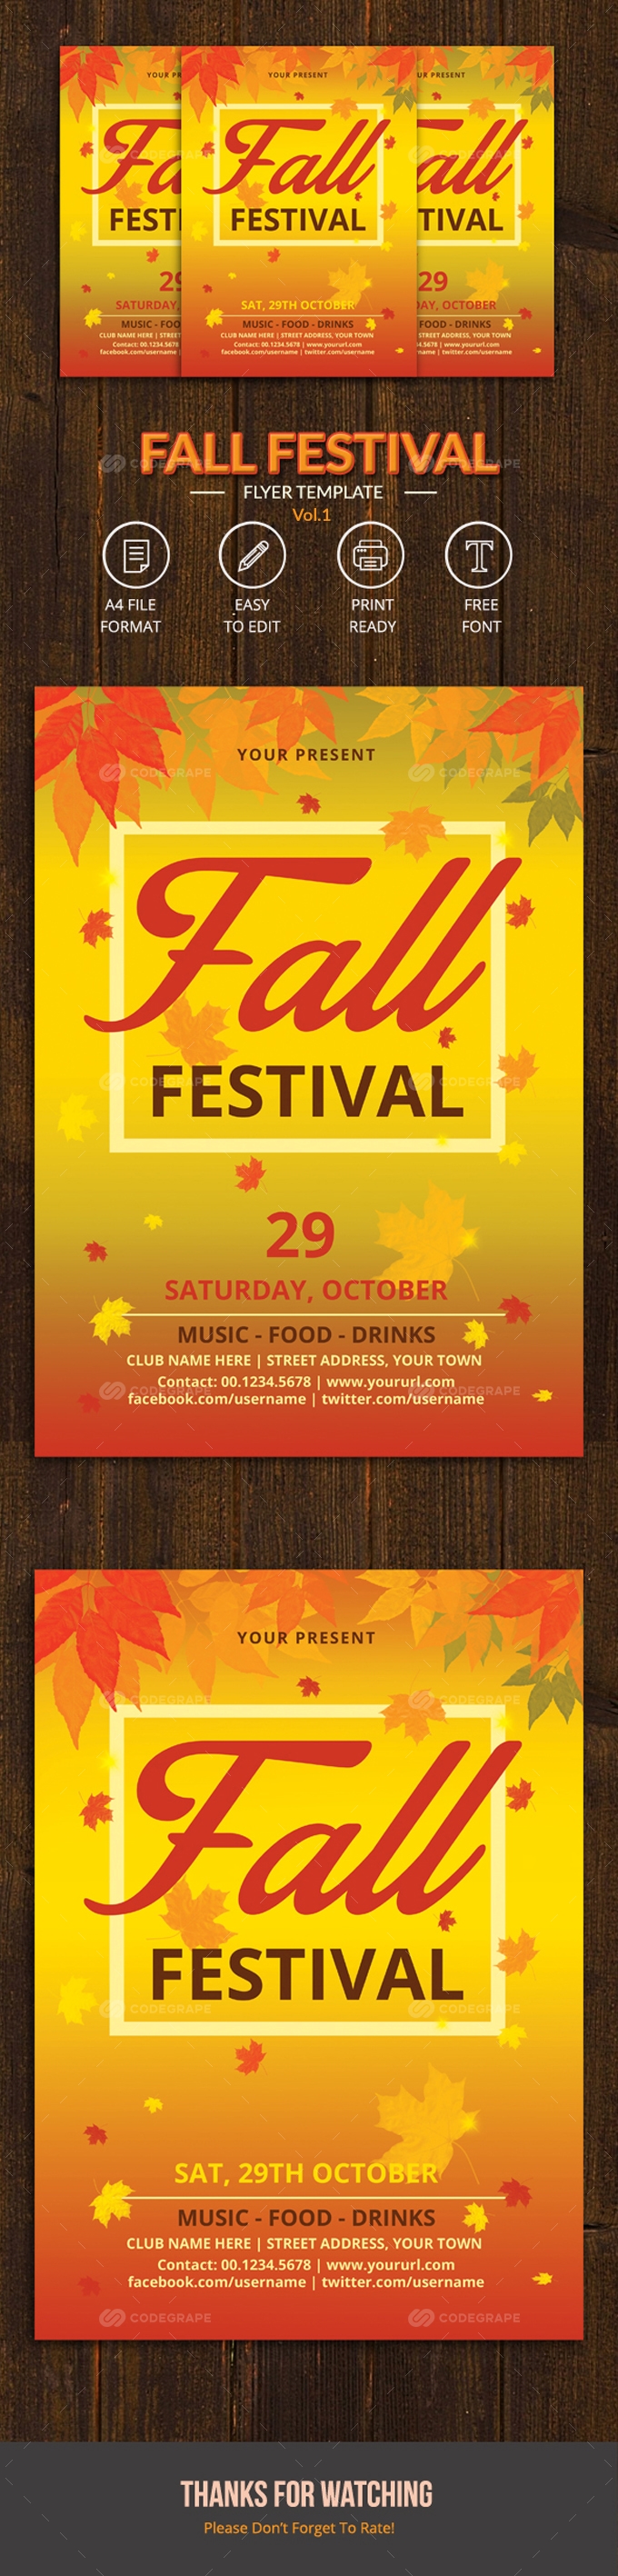 Fall Festival Flyer Vol.1